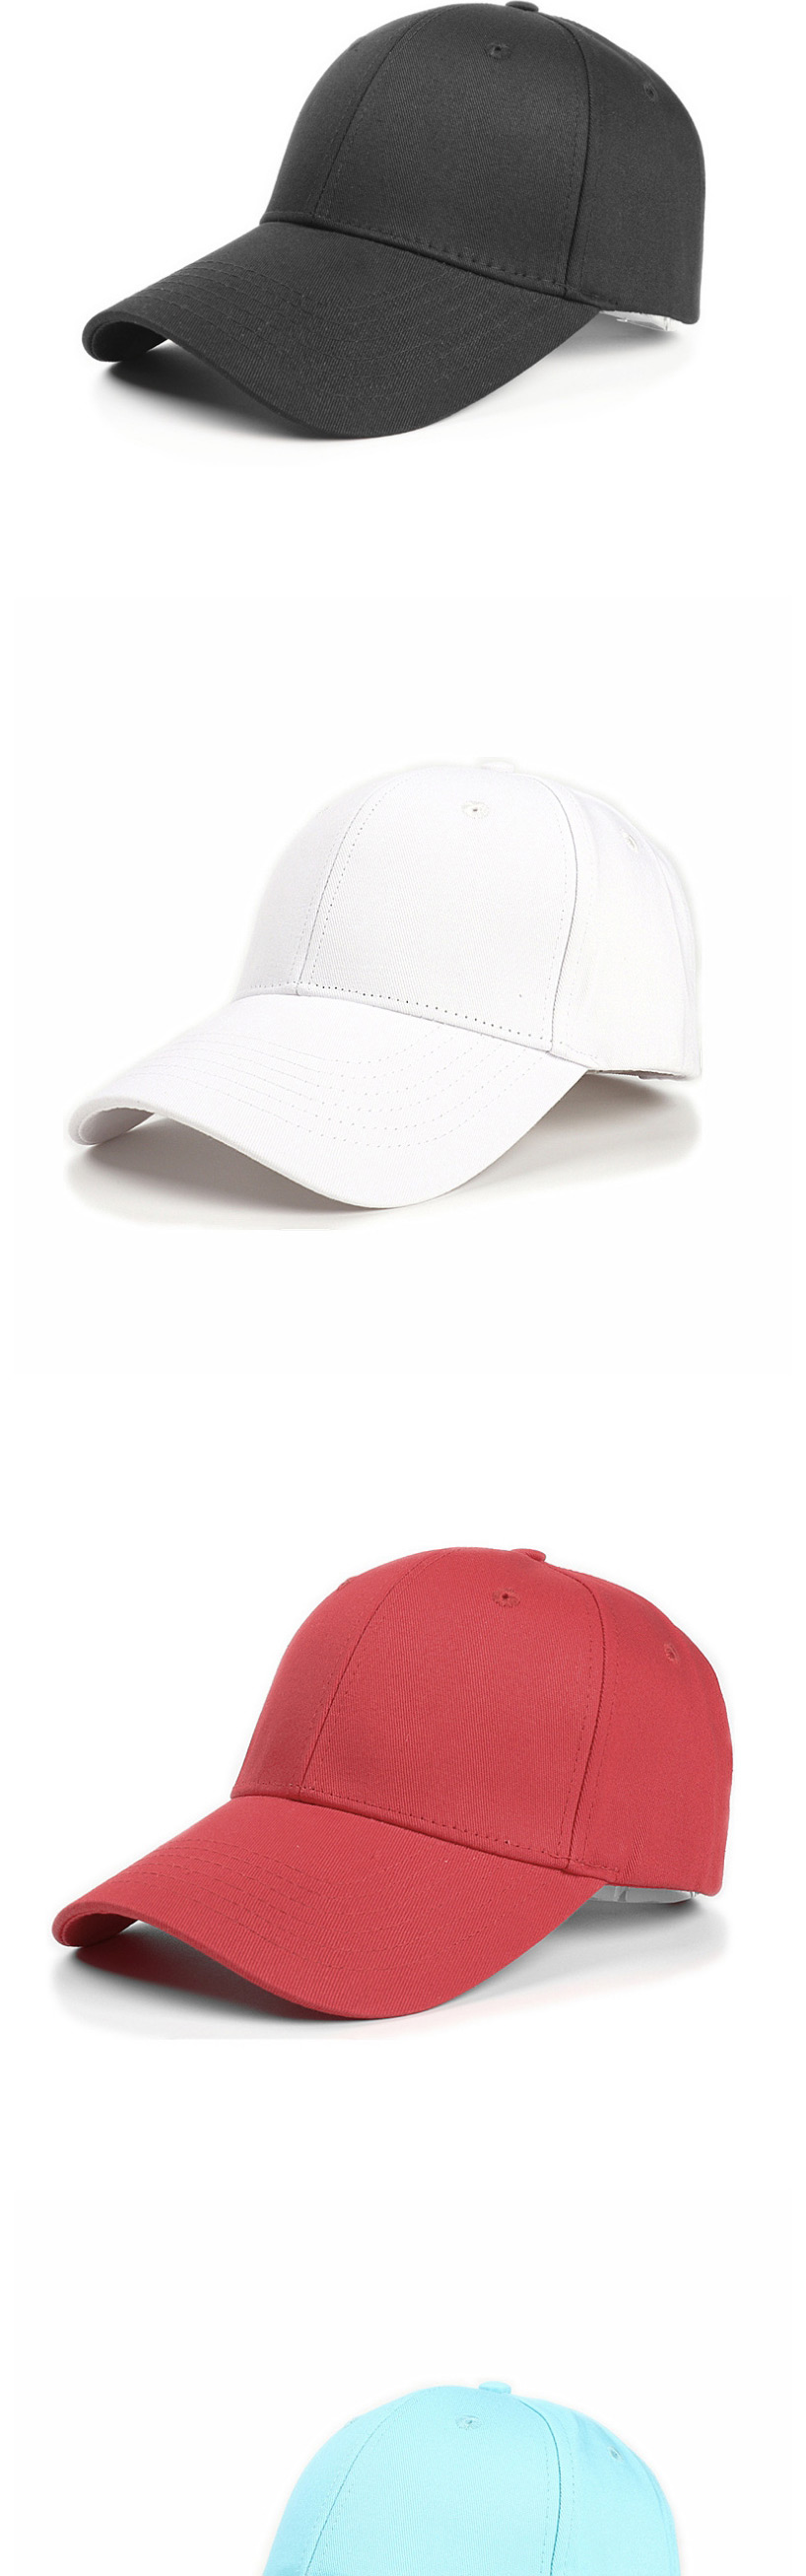 Fashion Red Wine Cotton Hard Top And Long Brim Baseball Cap,Baseball Caps